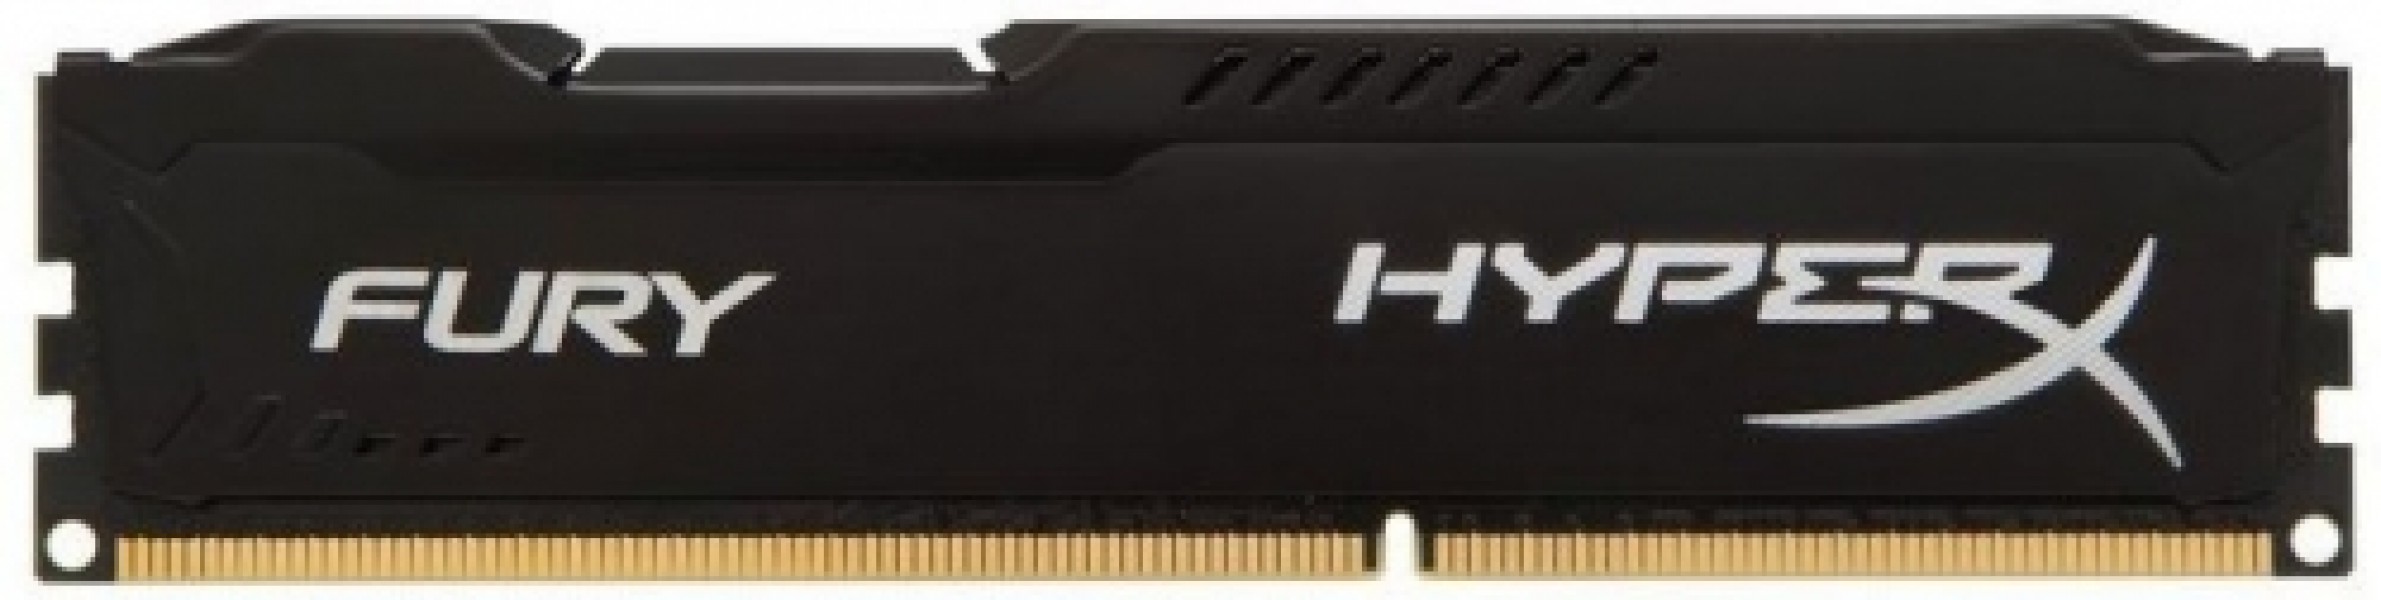 Kingston 8GB 1866MHz DDR3 CL10 DIMM HyperX Fury Black Series